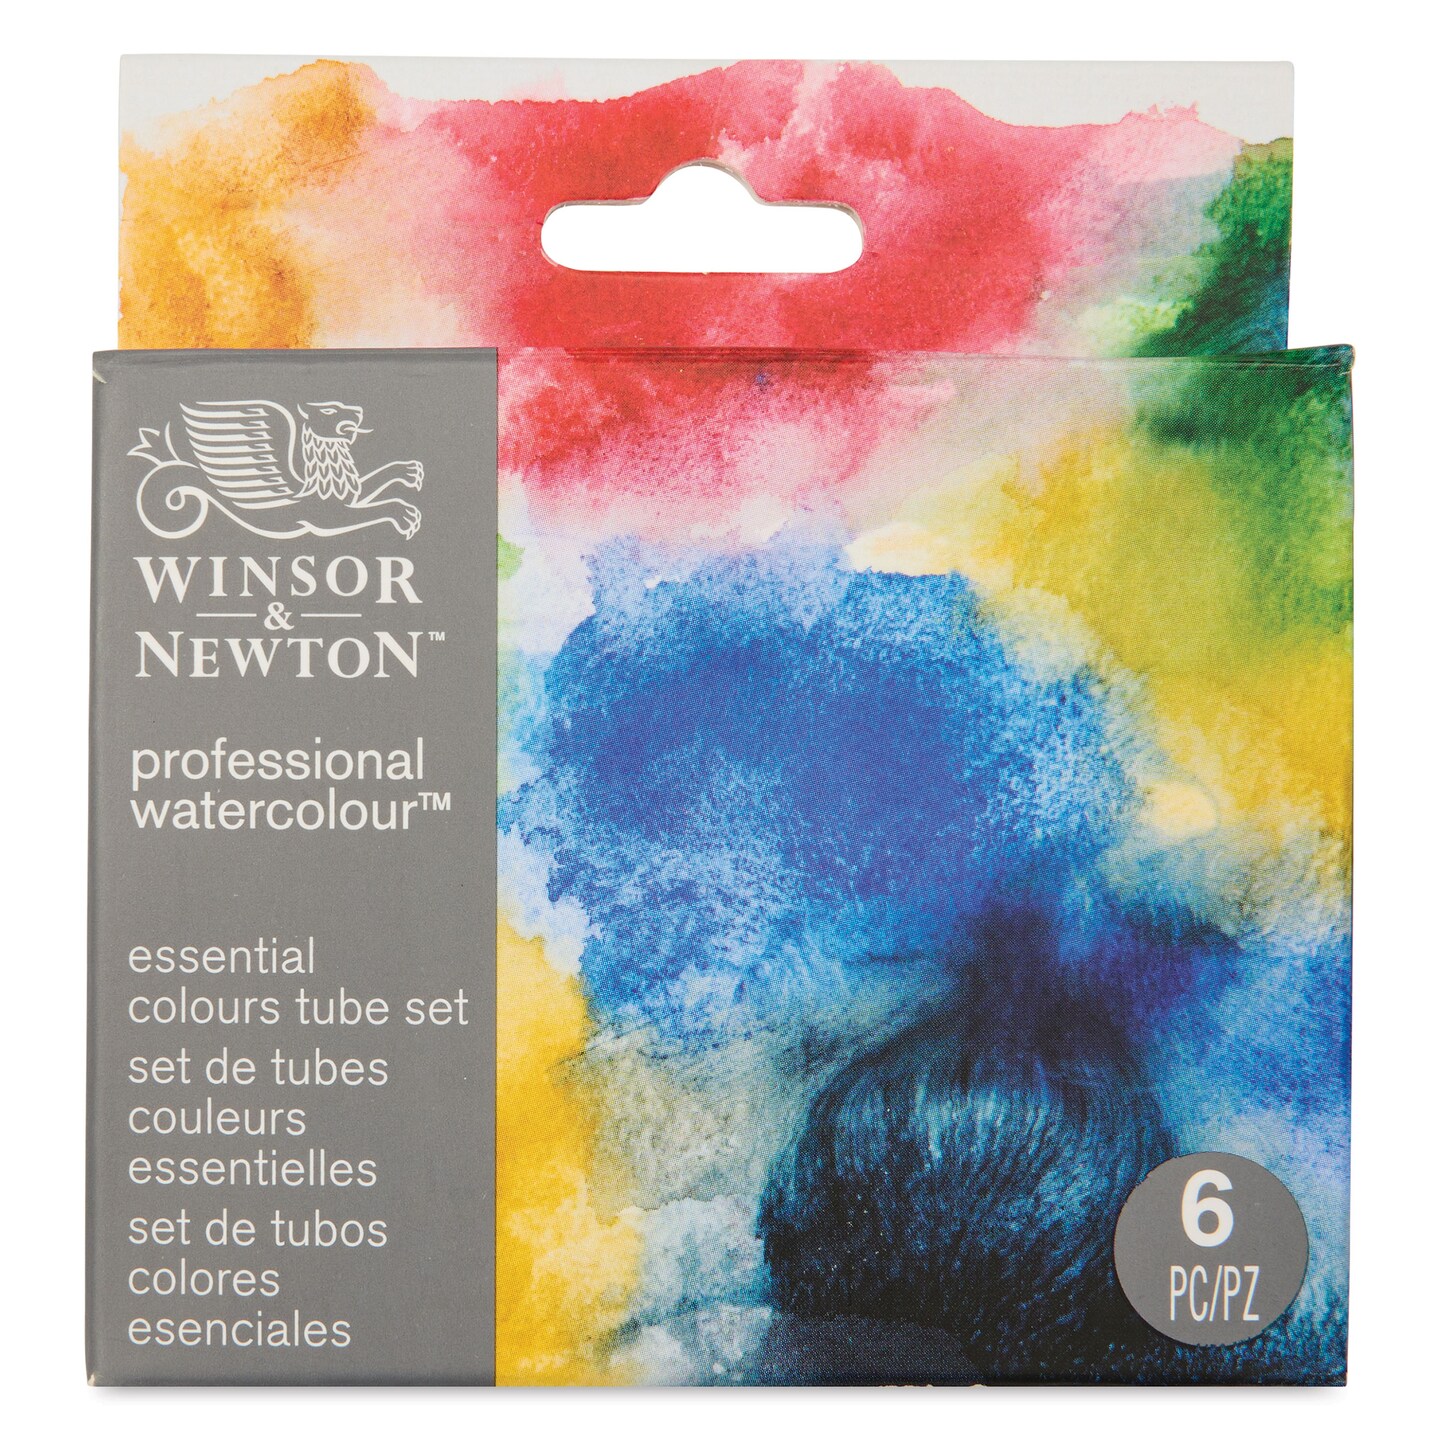 Winsor &#x26; Newton Professional Watercolor - Set of 6, Essential Set - Blick Exclusive!